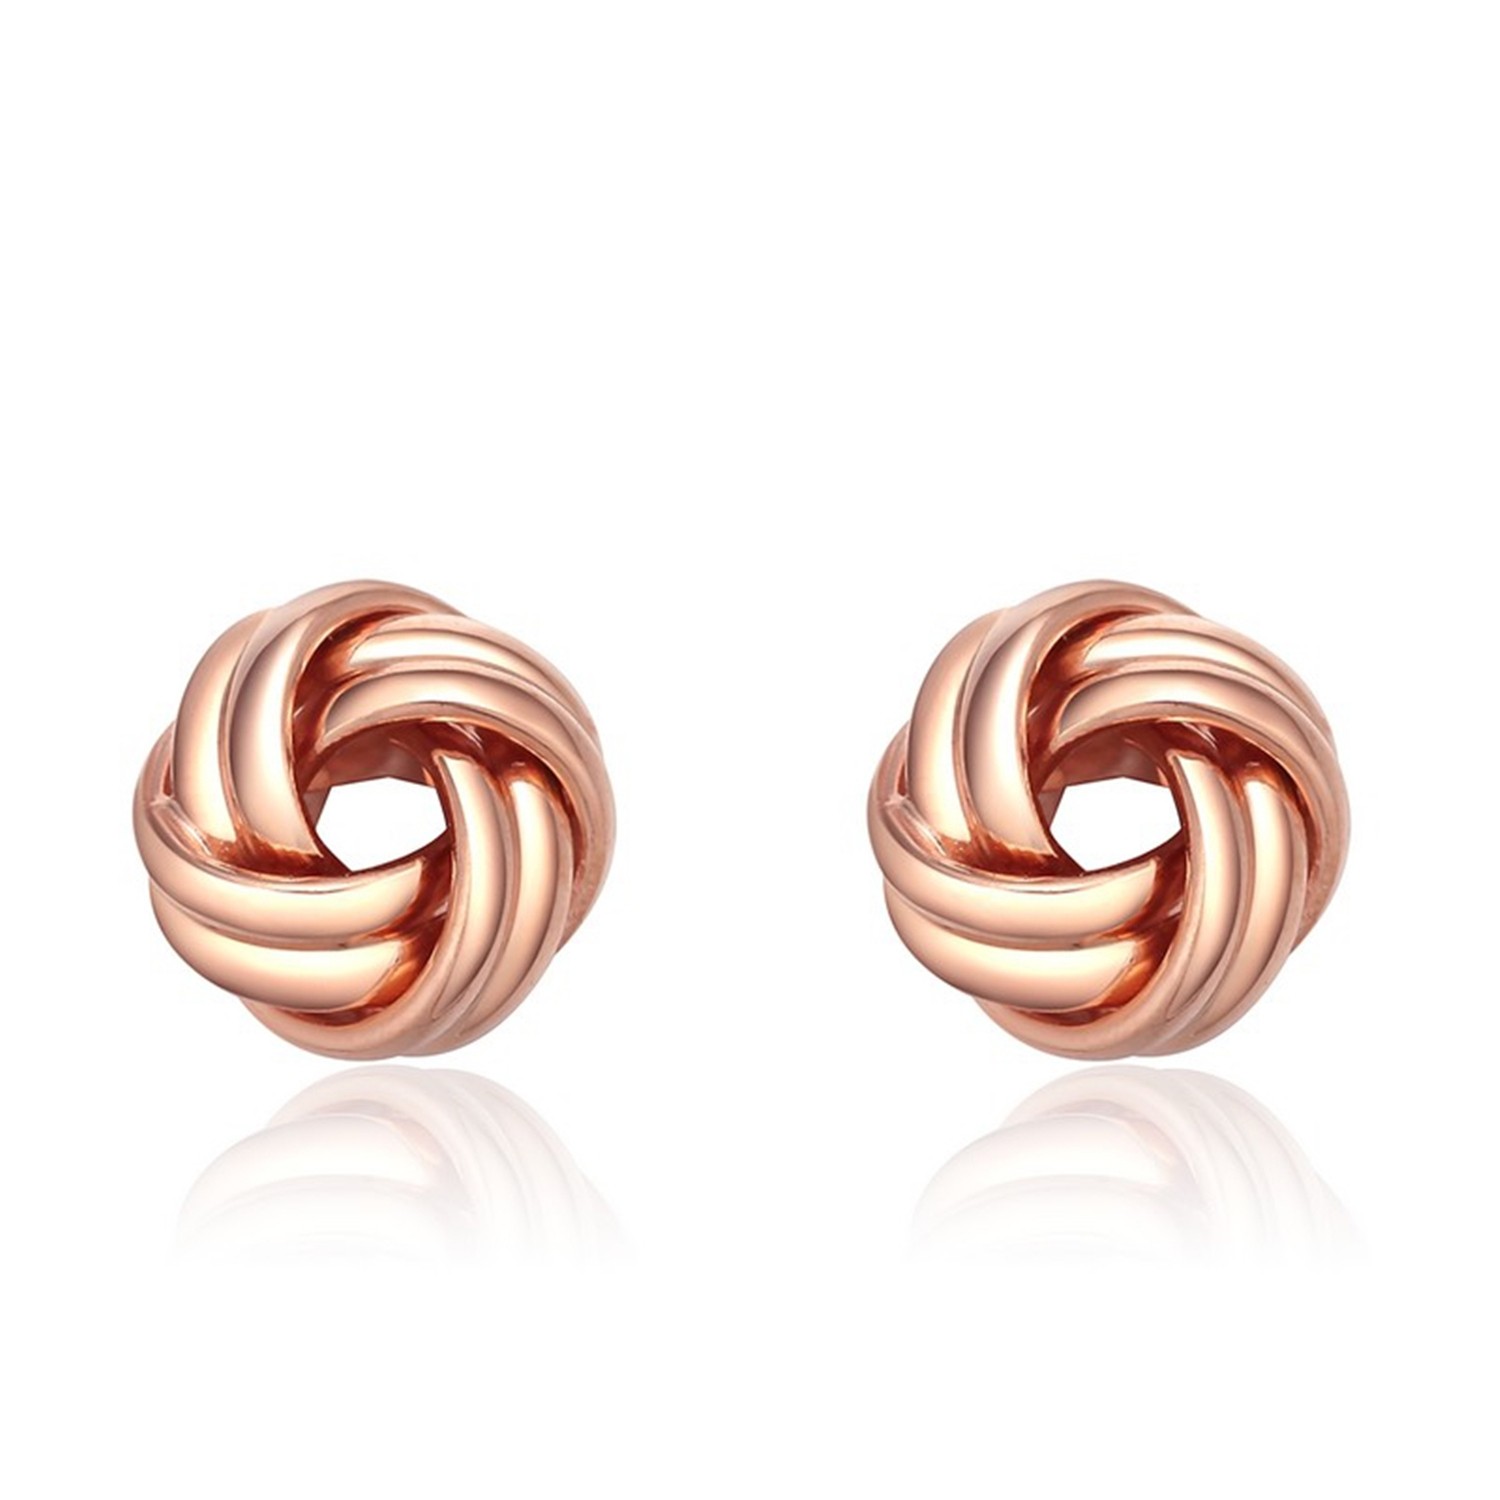 Best Selling Minimalism Earring 925 Sterling Silver Rose Gold Plated Women Gift Earring Stud Jewelry